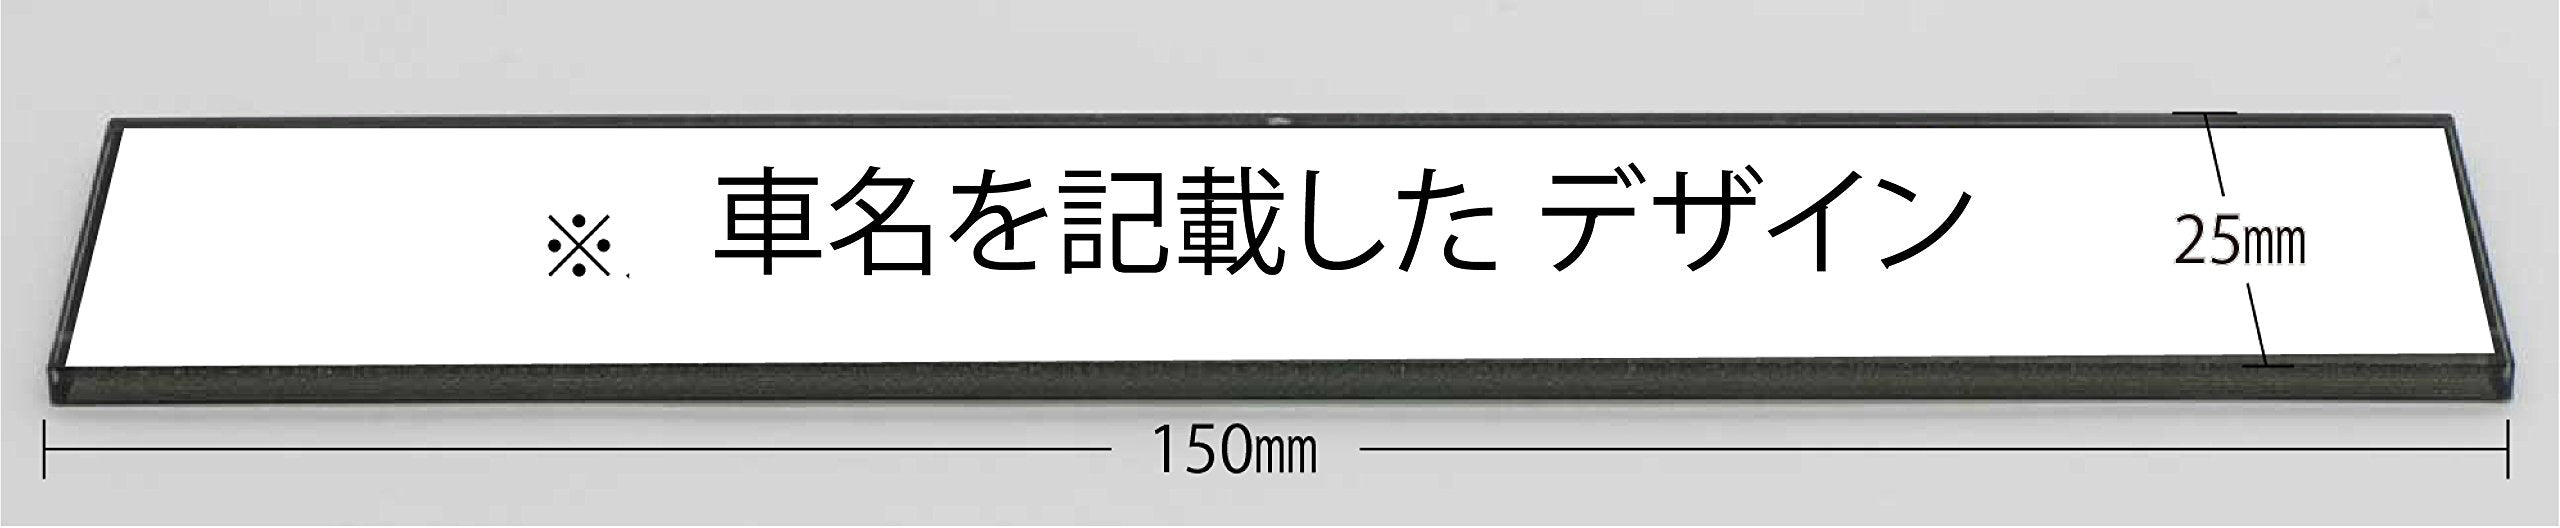 Fujimi Id-259 Kpgc 10 Skyline Gt-R 2 Door 71 W/ Car Name Plate 1/24 Scale Car Kit